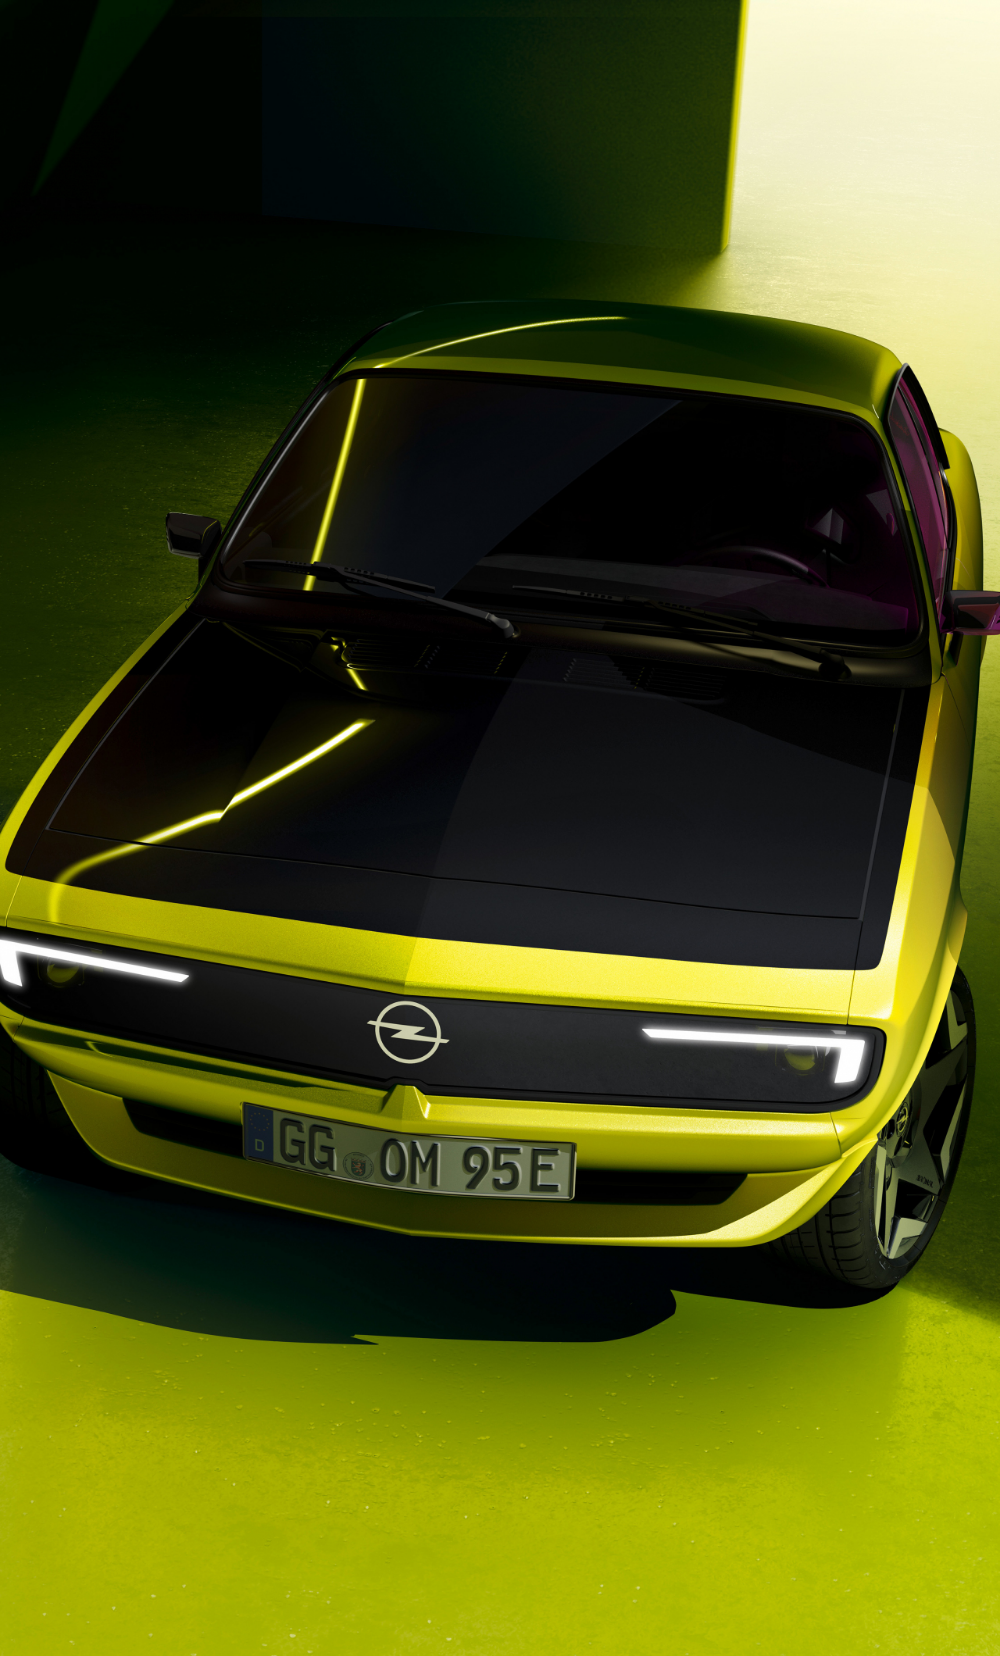  Opel Hintergrundbild 1000x1656. Download 1280x2120 wallpaper opel manta gse elektromod, car, iphone 6 plus, 1280x2120 HD image, background, 27063. Opel manta, Opel, Manta